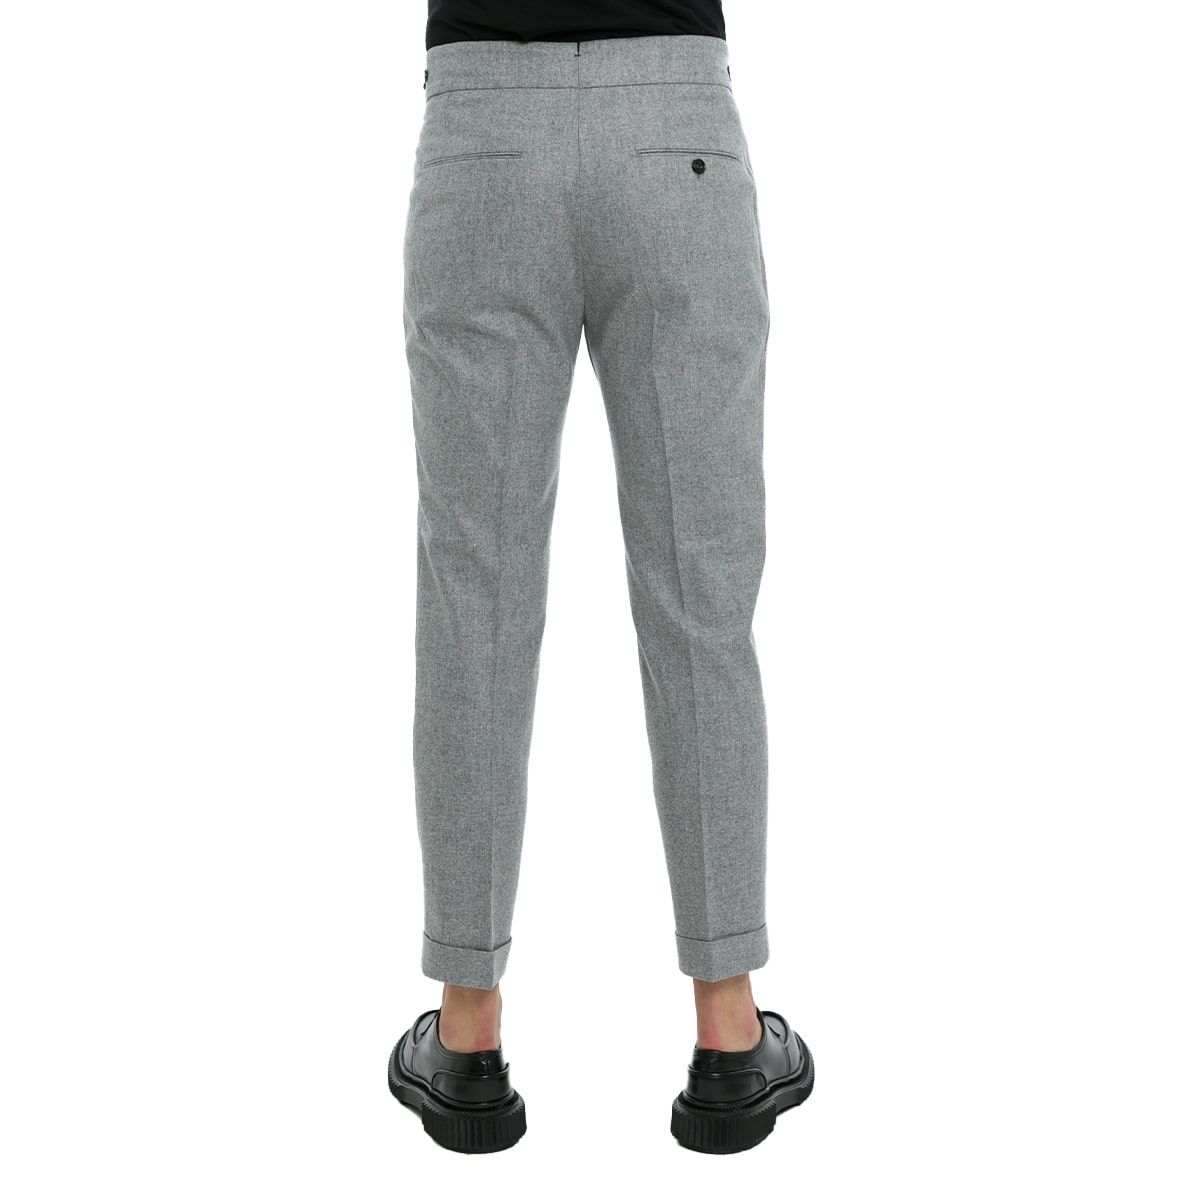 Retro Elax Grey Trousers